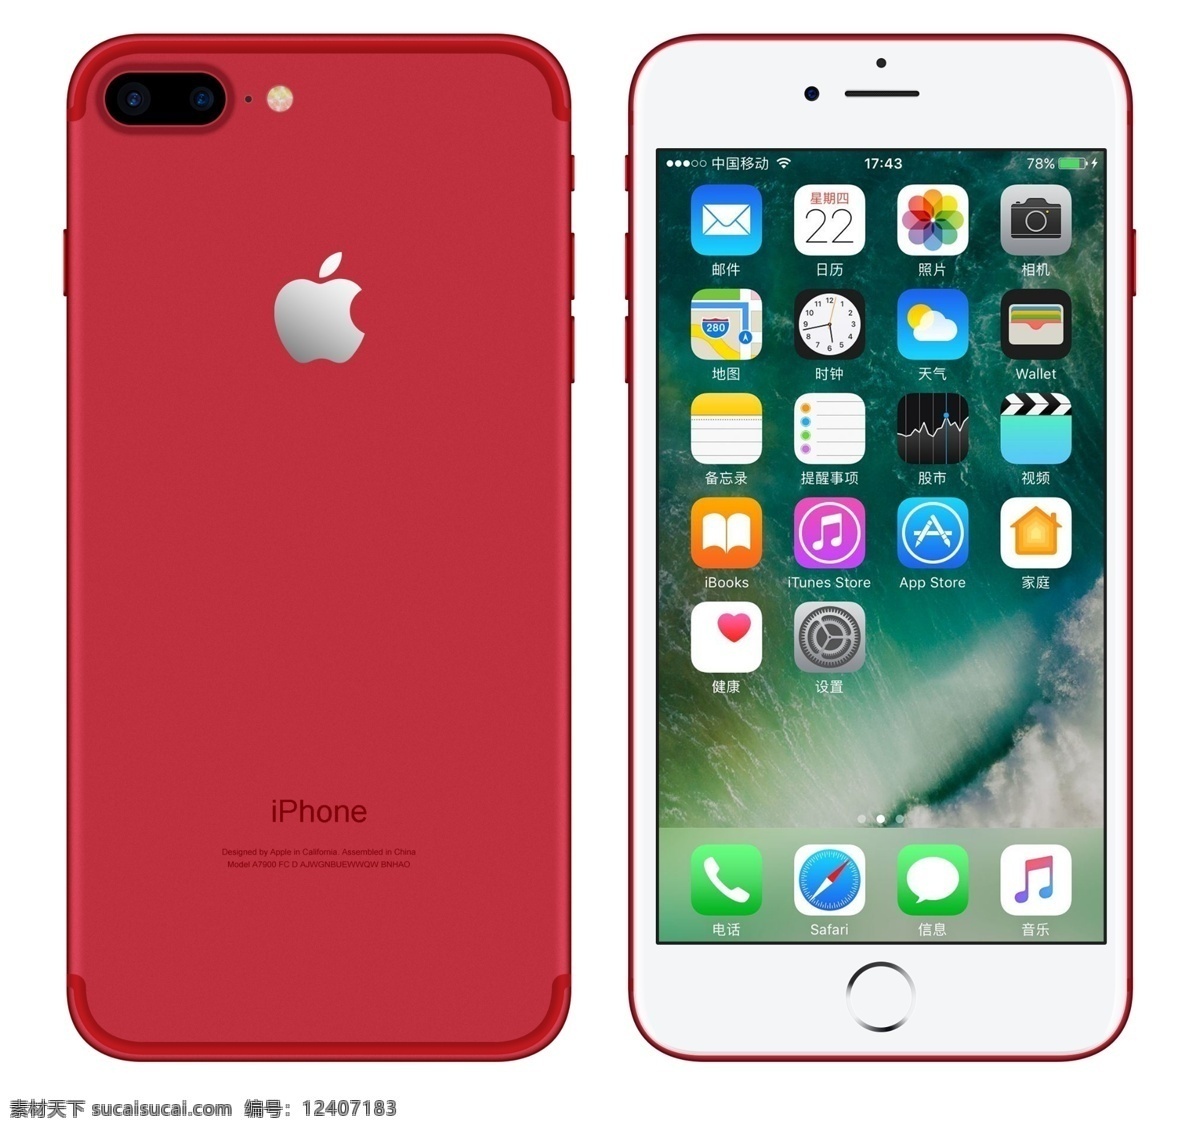 iphone7plus 红色 特别 版 iphone7 苹果7 plus 双摄像 壁纸